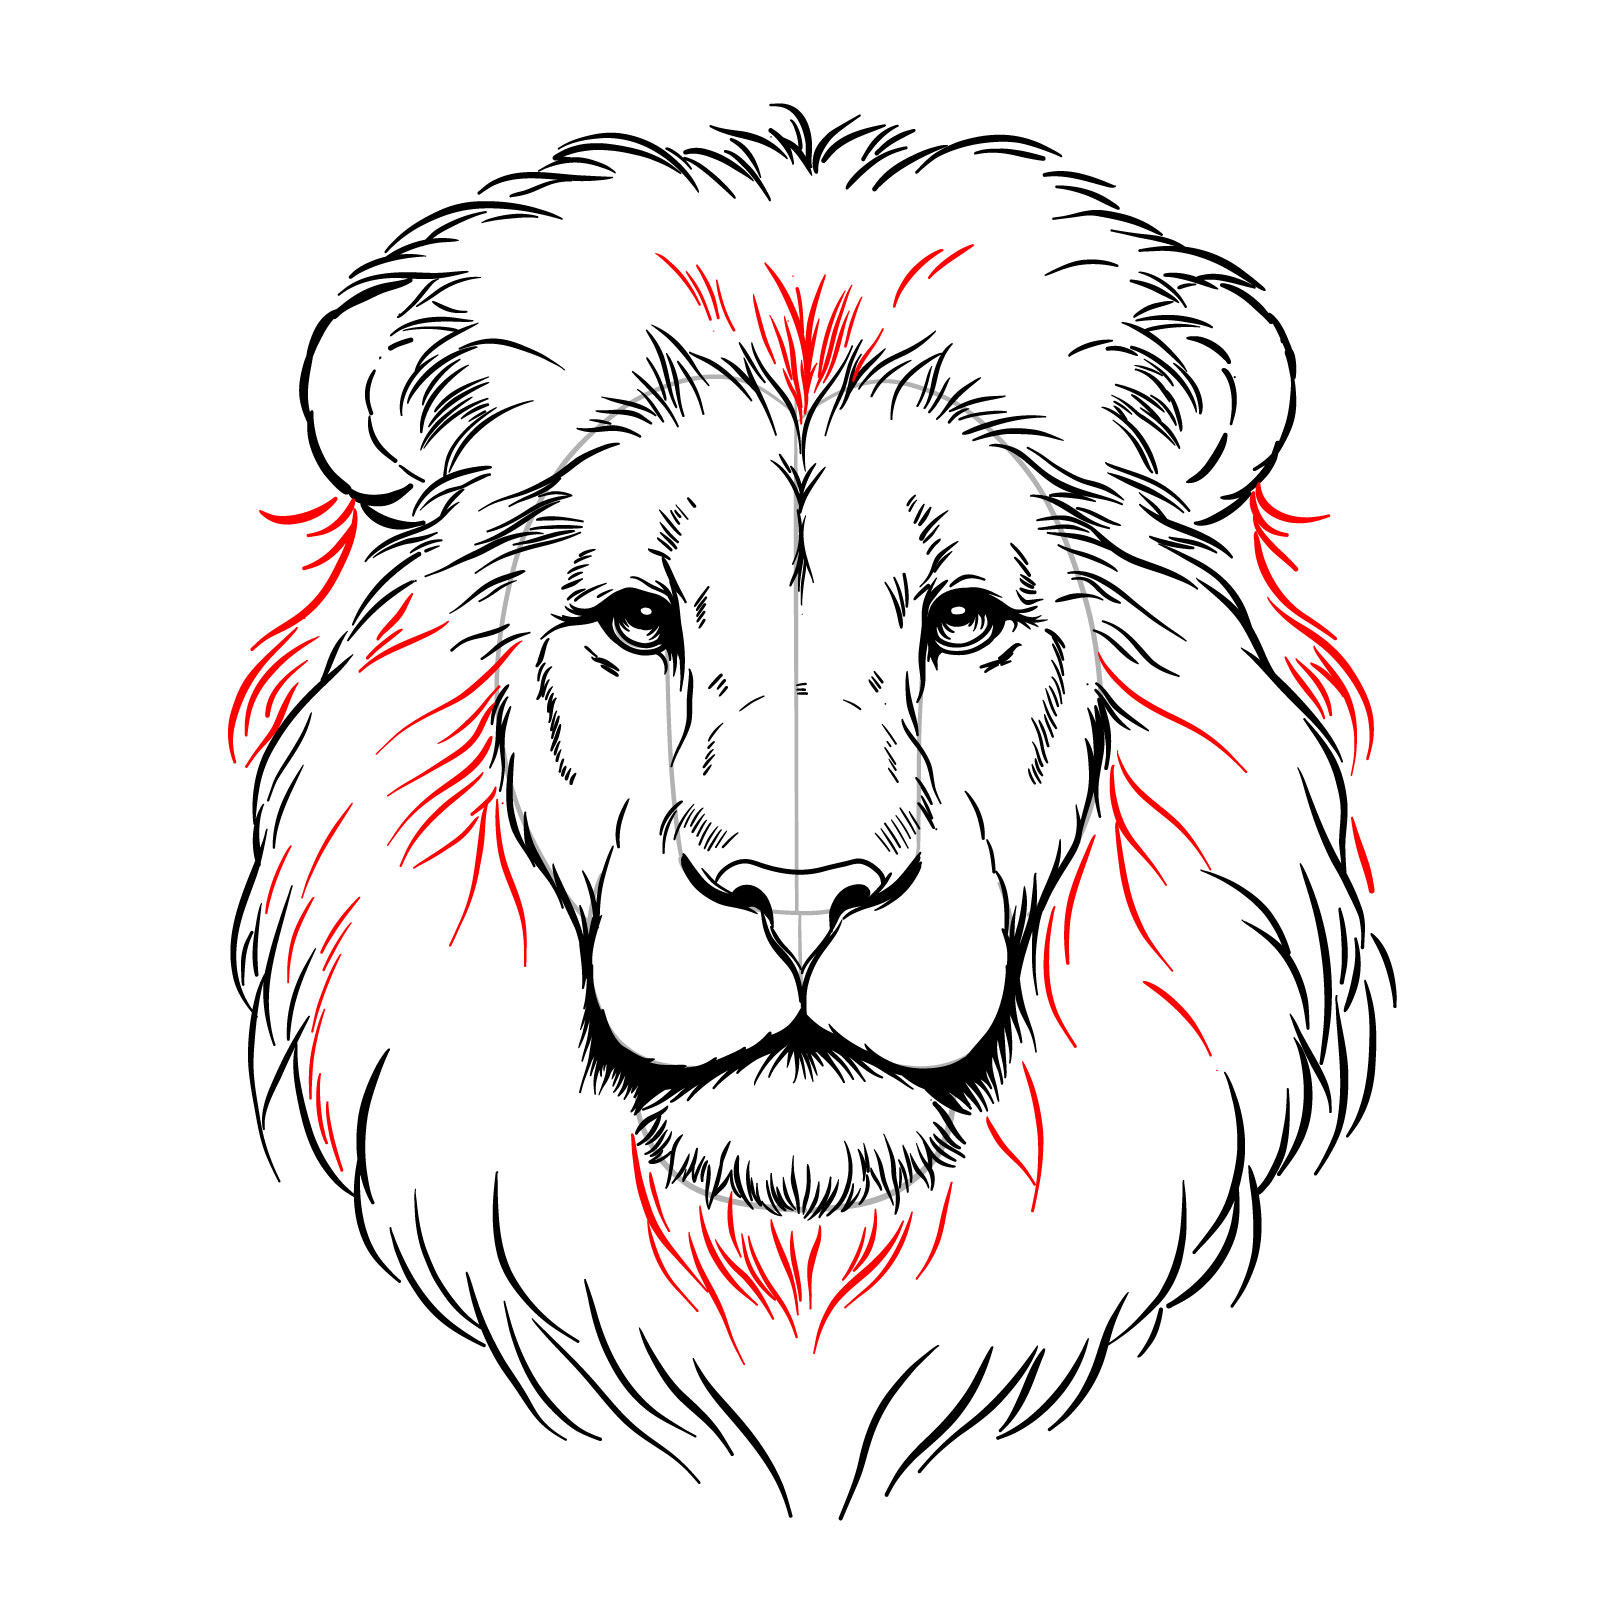 Adding fur details to the lion's mane - step 12